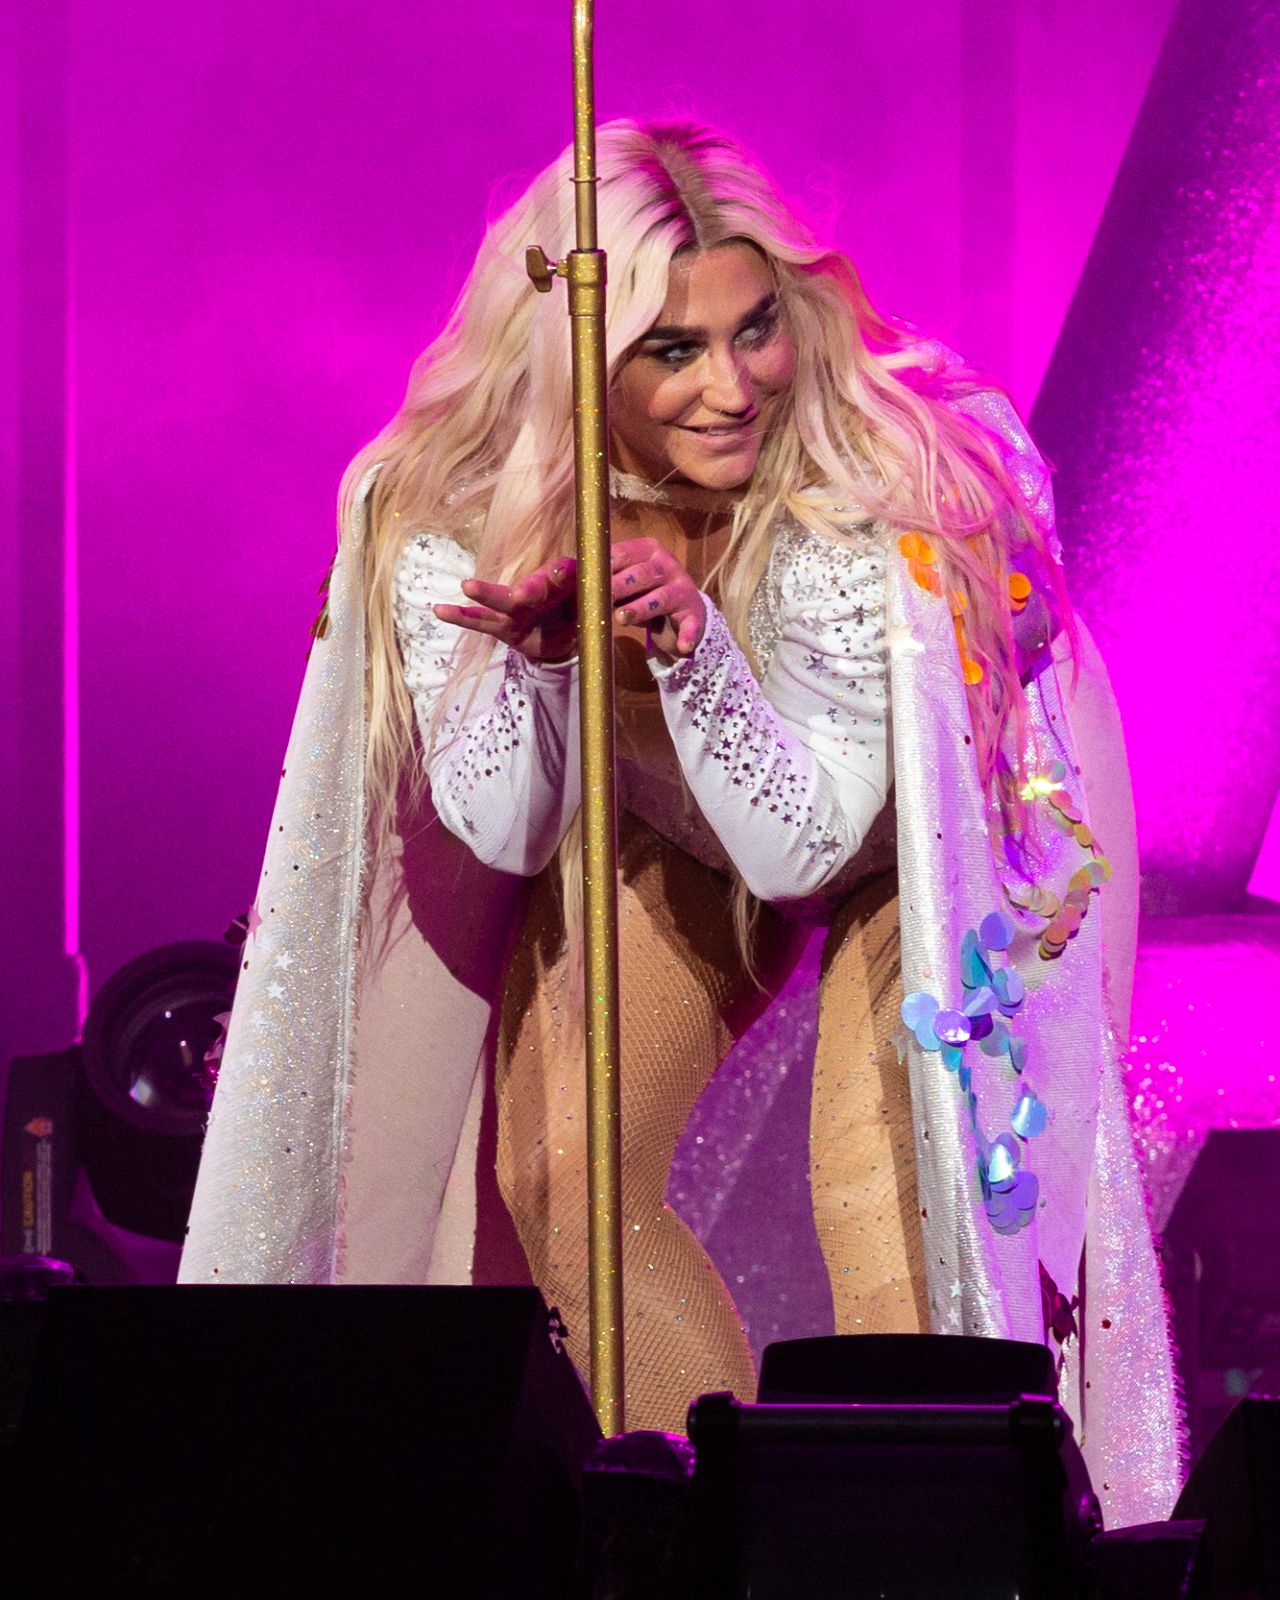 Kesha Performs - Concert in Noblesville 07/19/2018